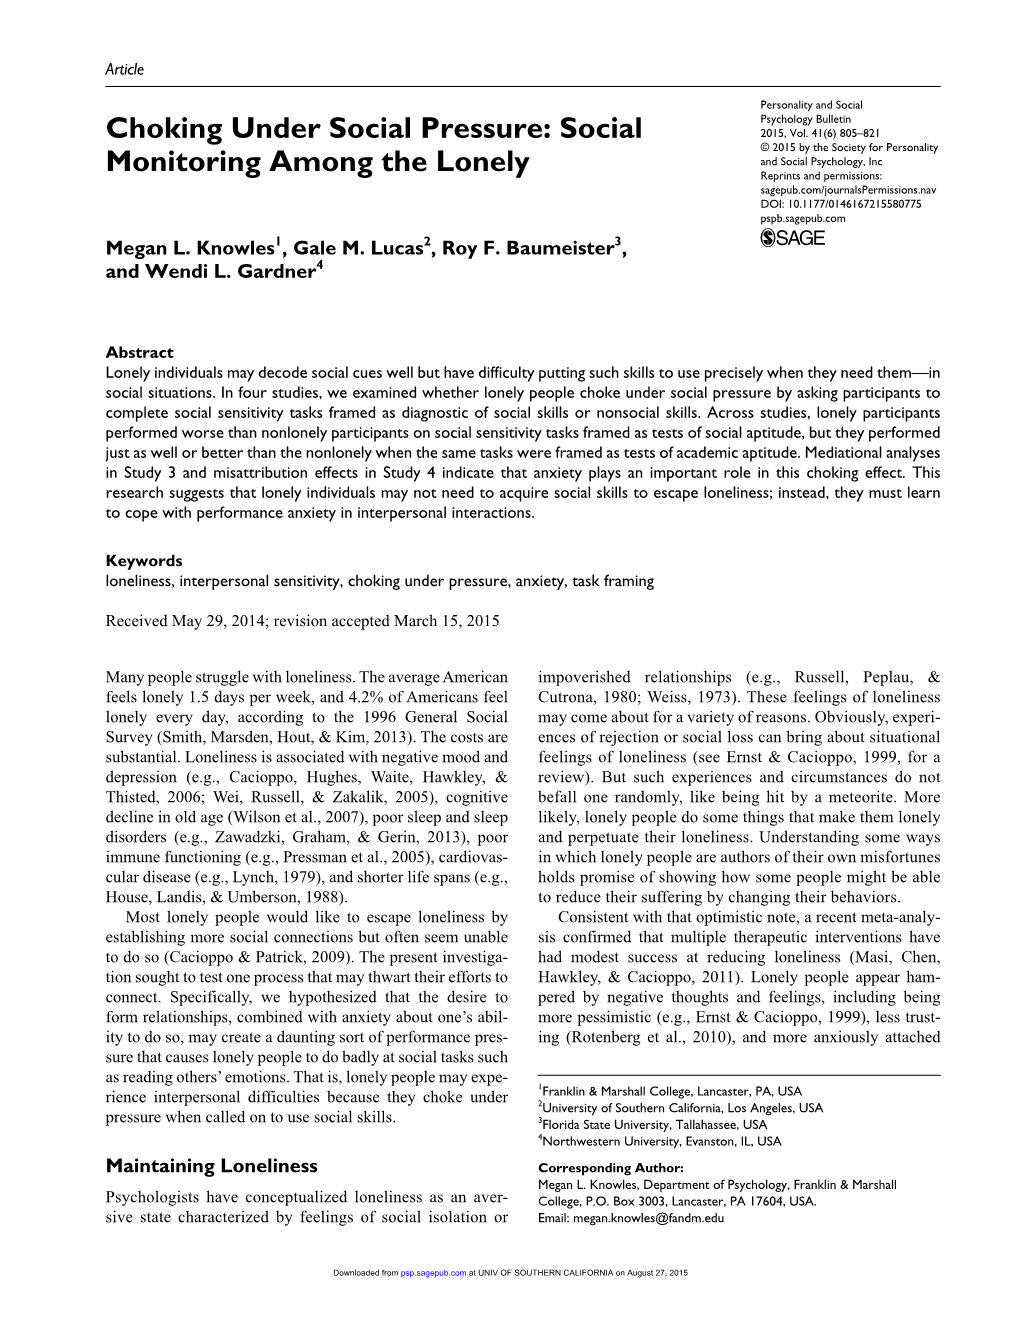 Choking Under Social Pressure: Social Monitoring Among the Lonely